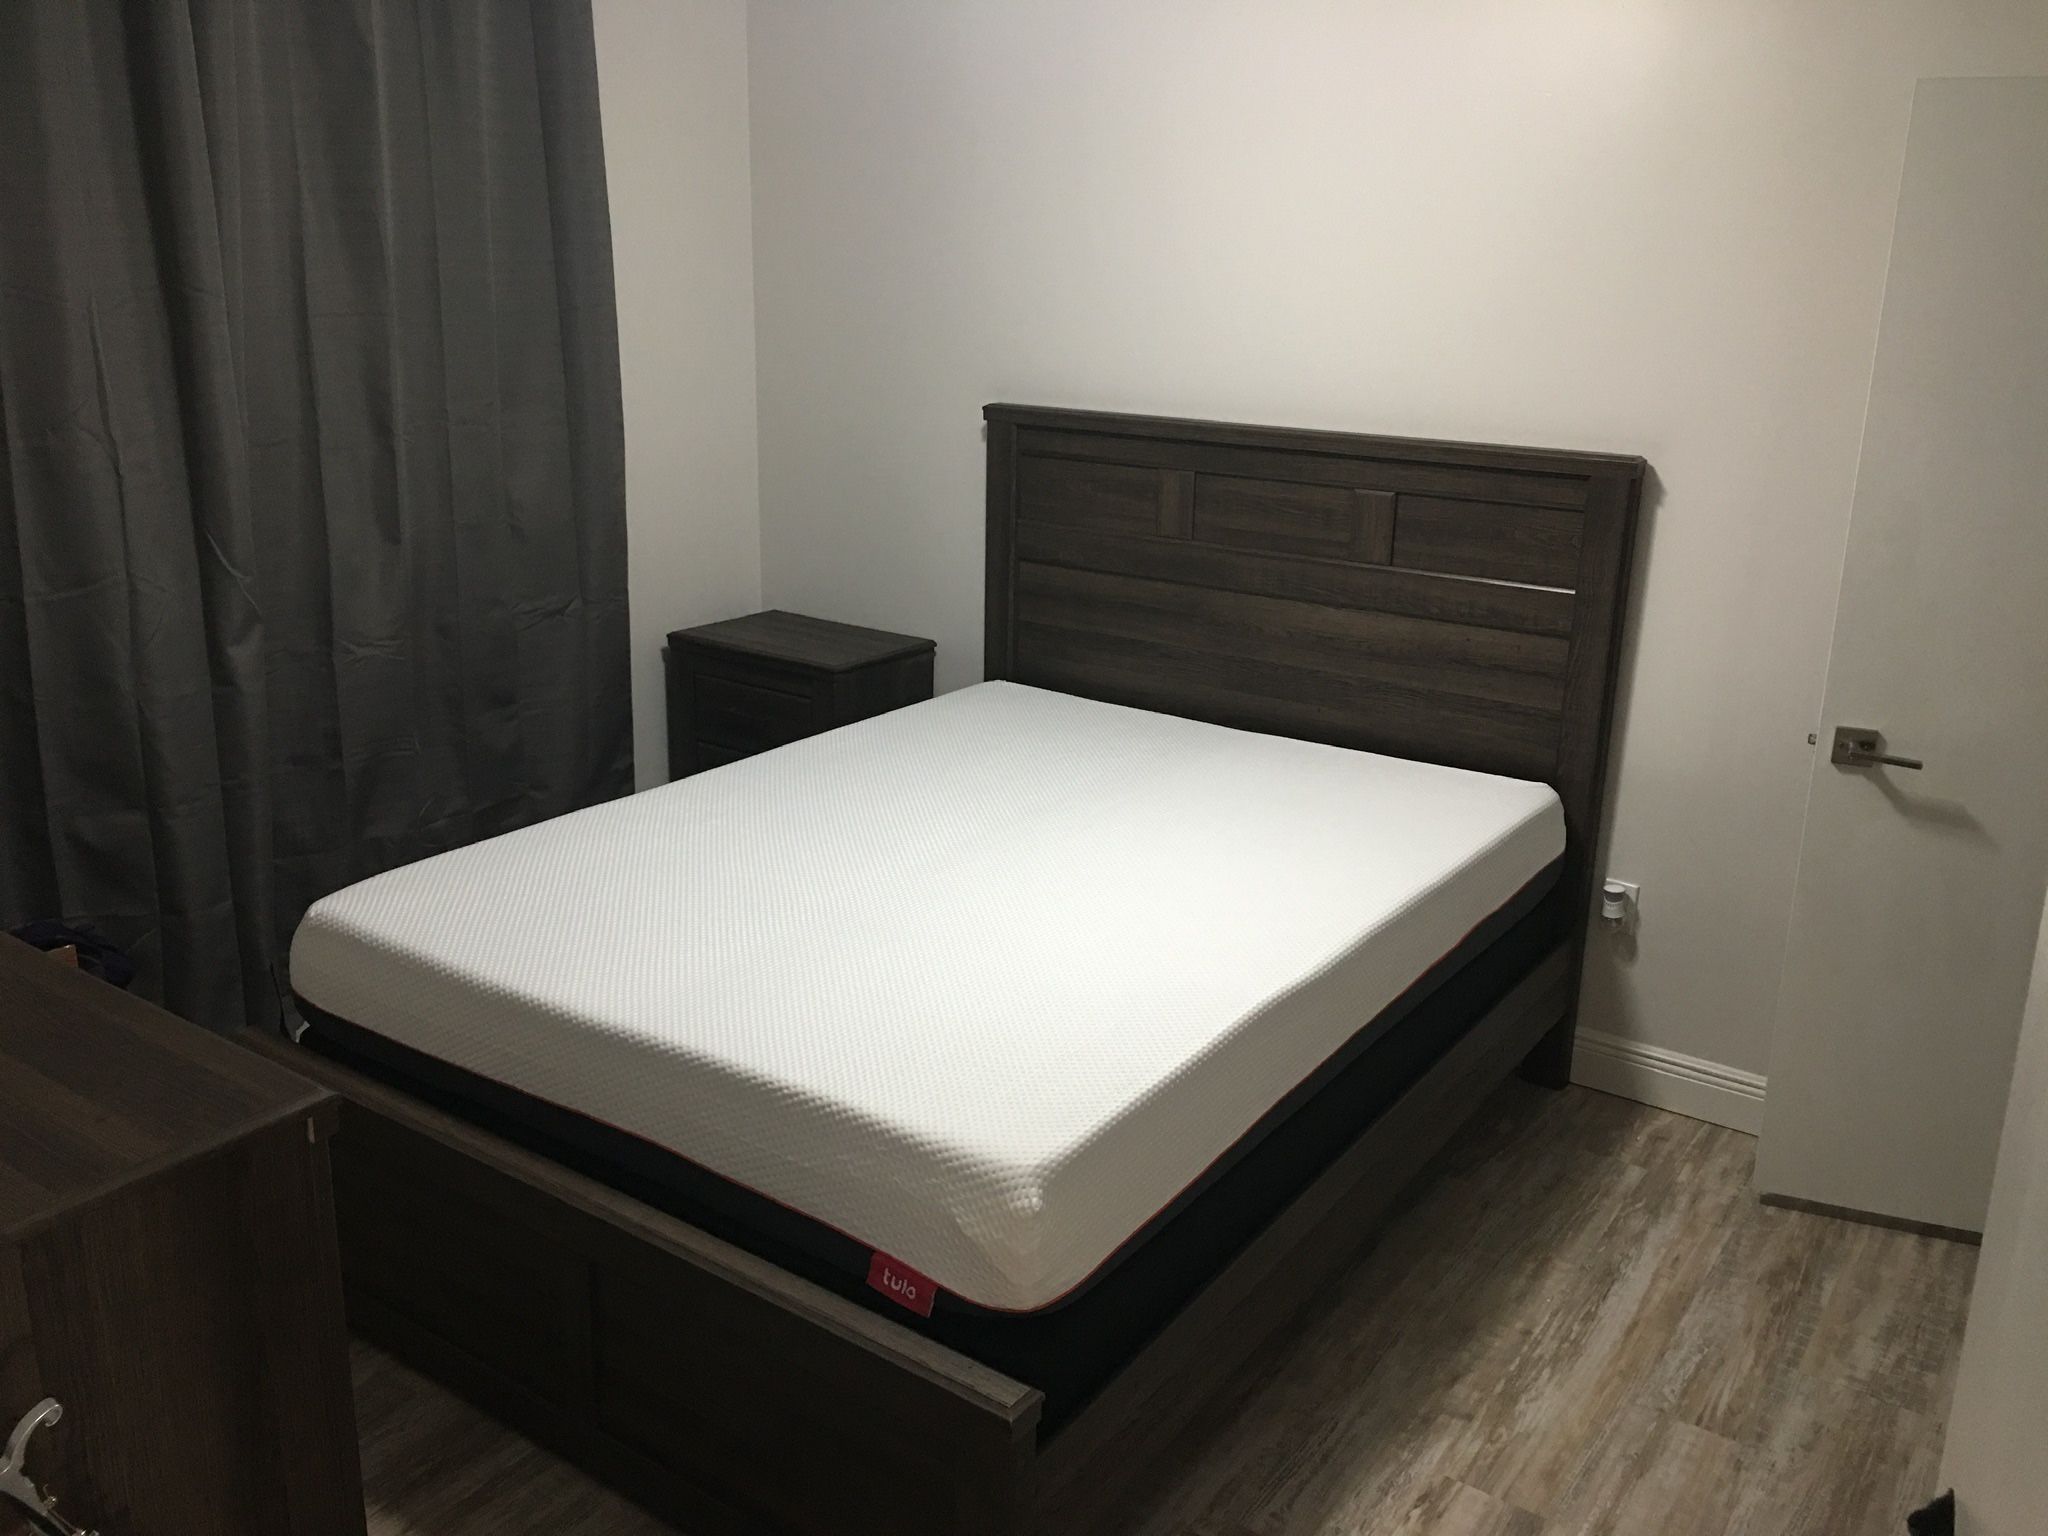 Queen Bed Frame & Matching Dresser - Room Set